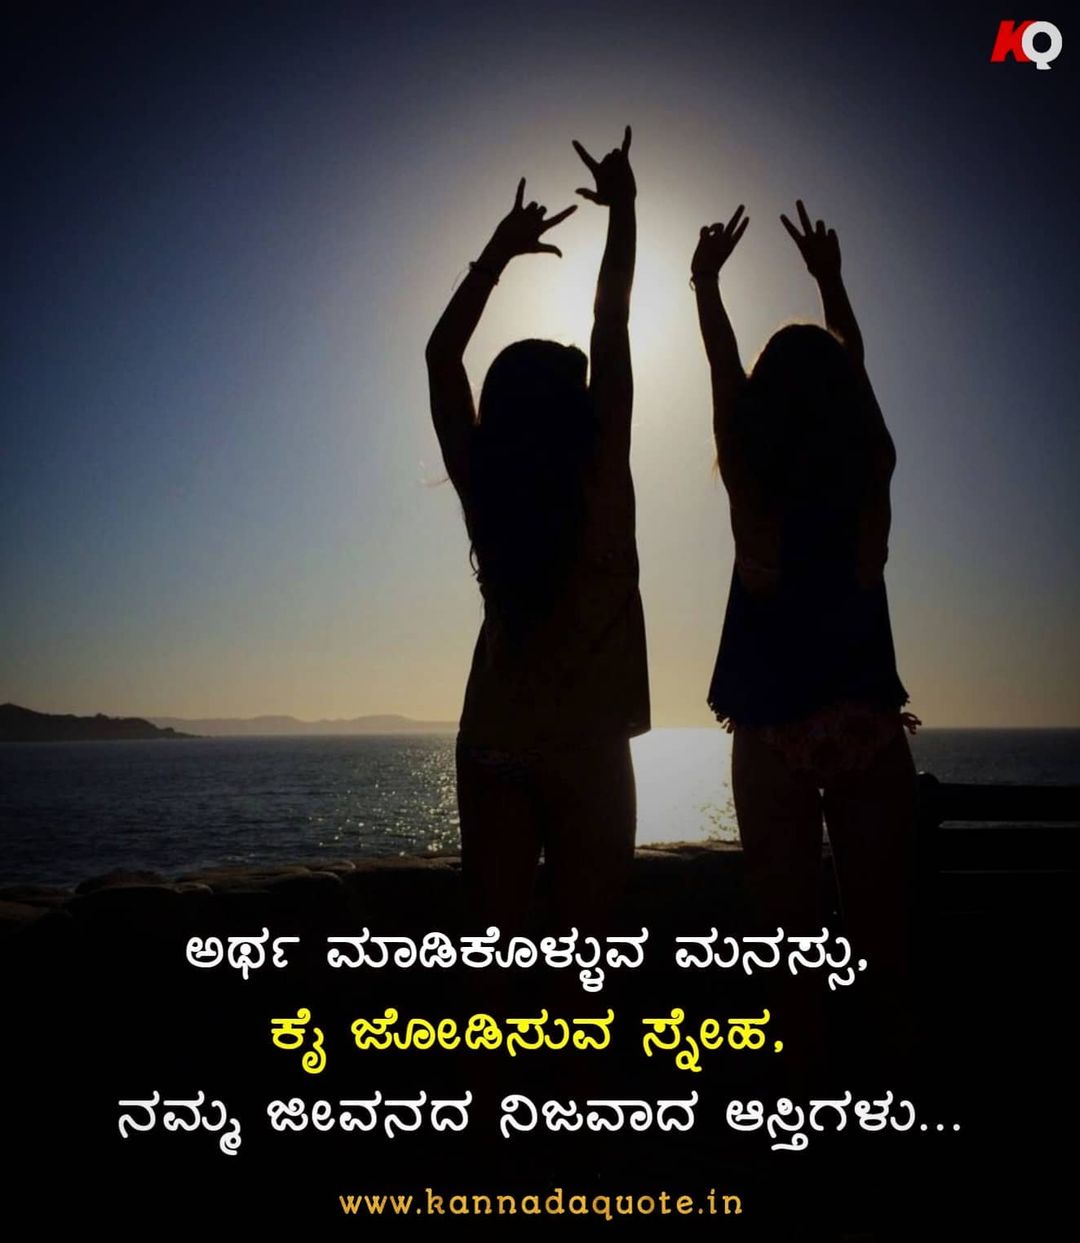 Kannada Language Kannada Kavanagalu Friendship - Draw-o